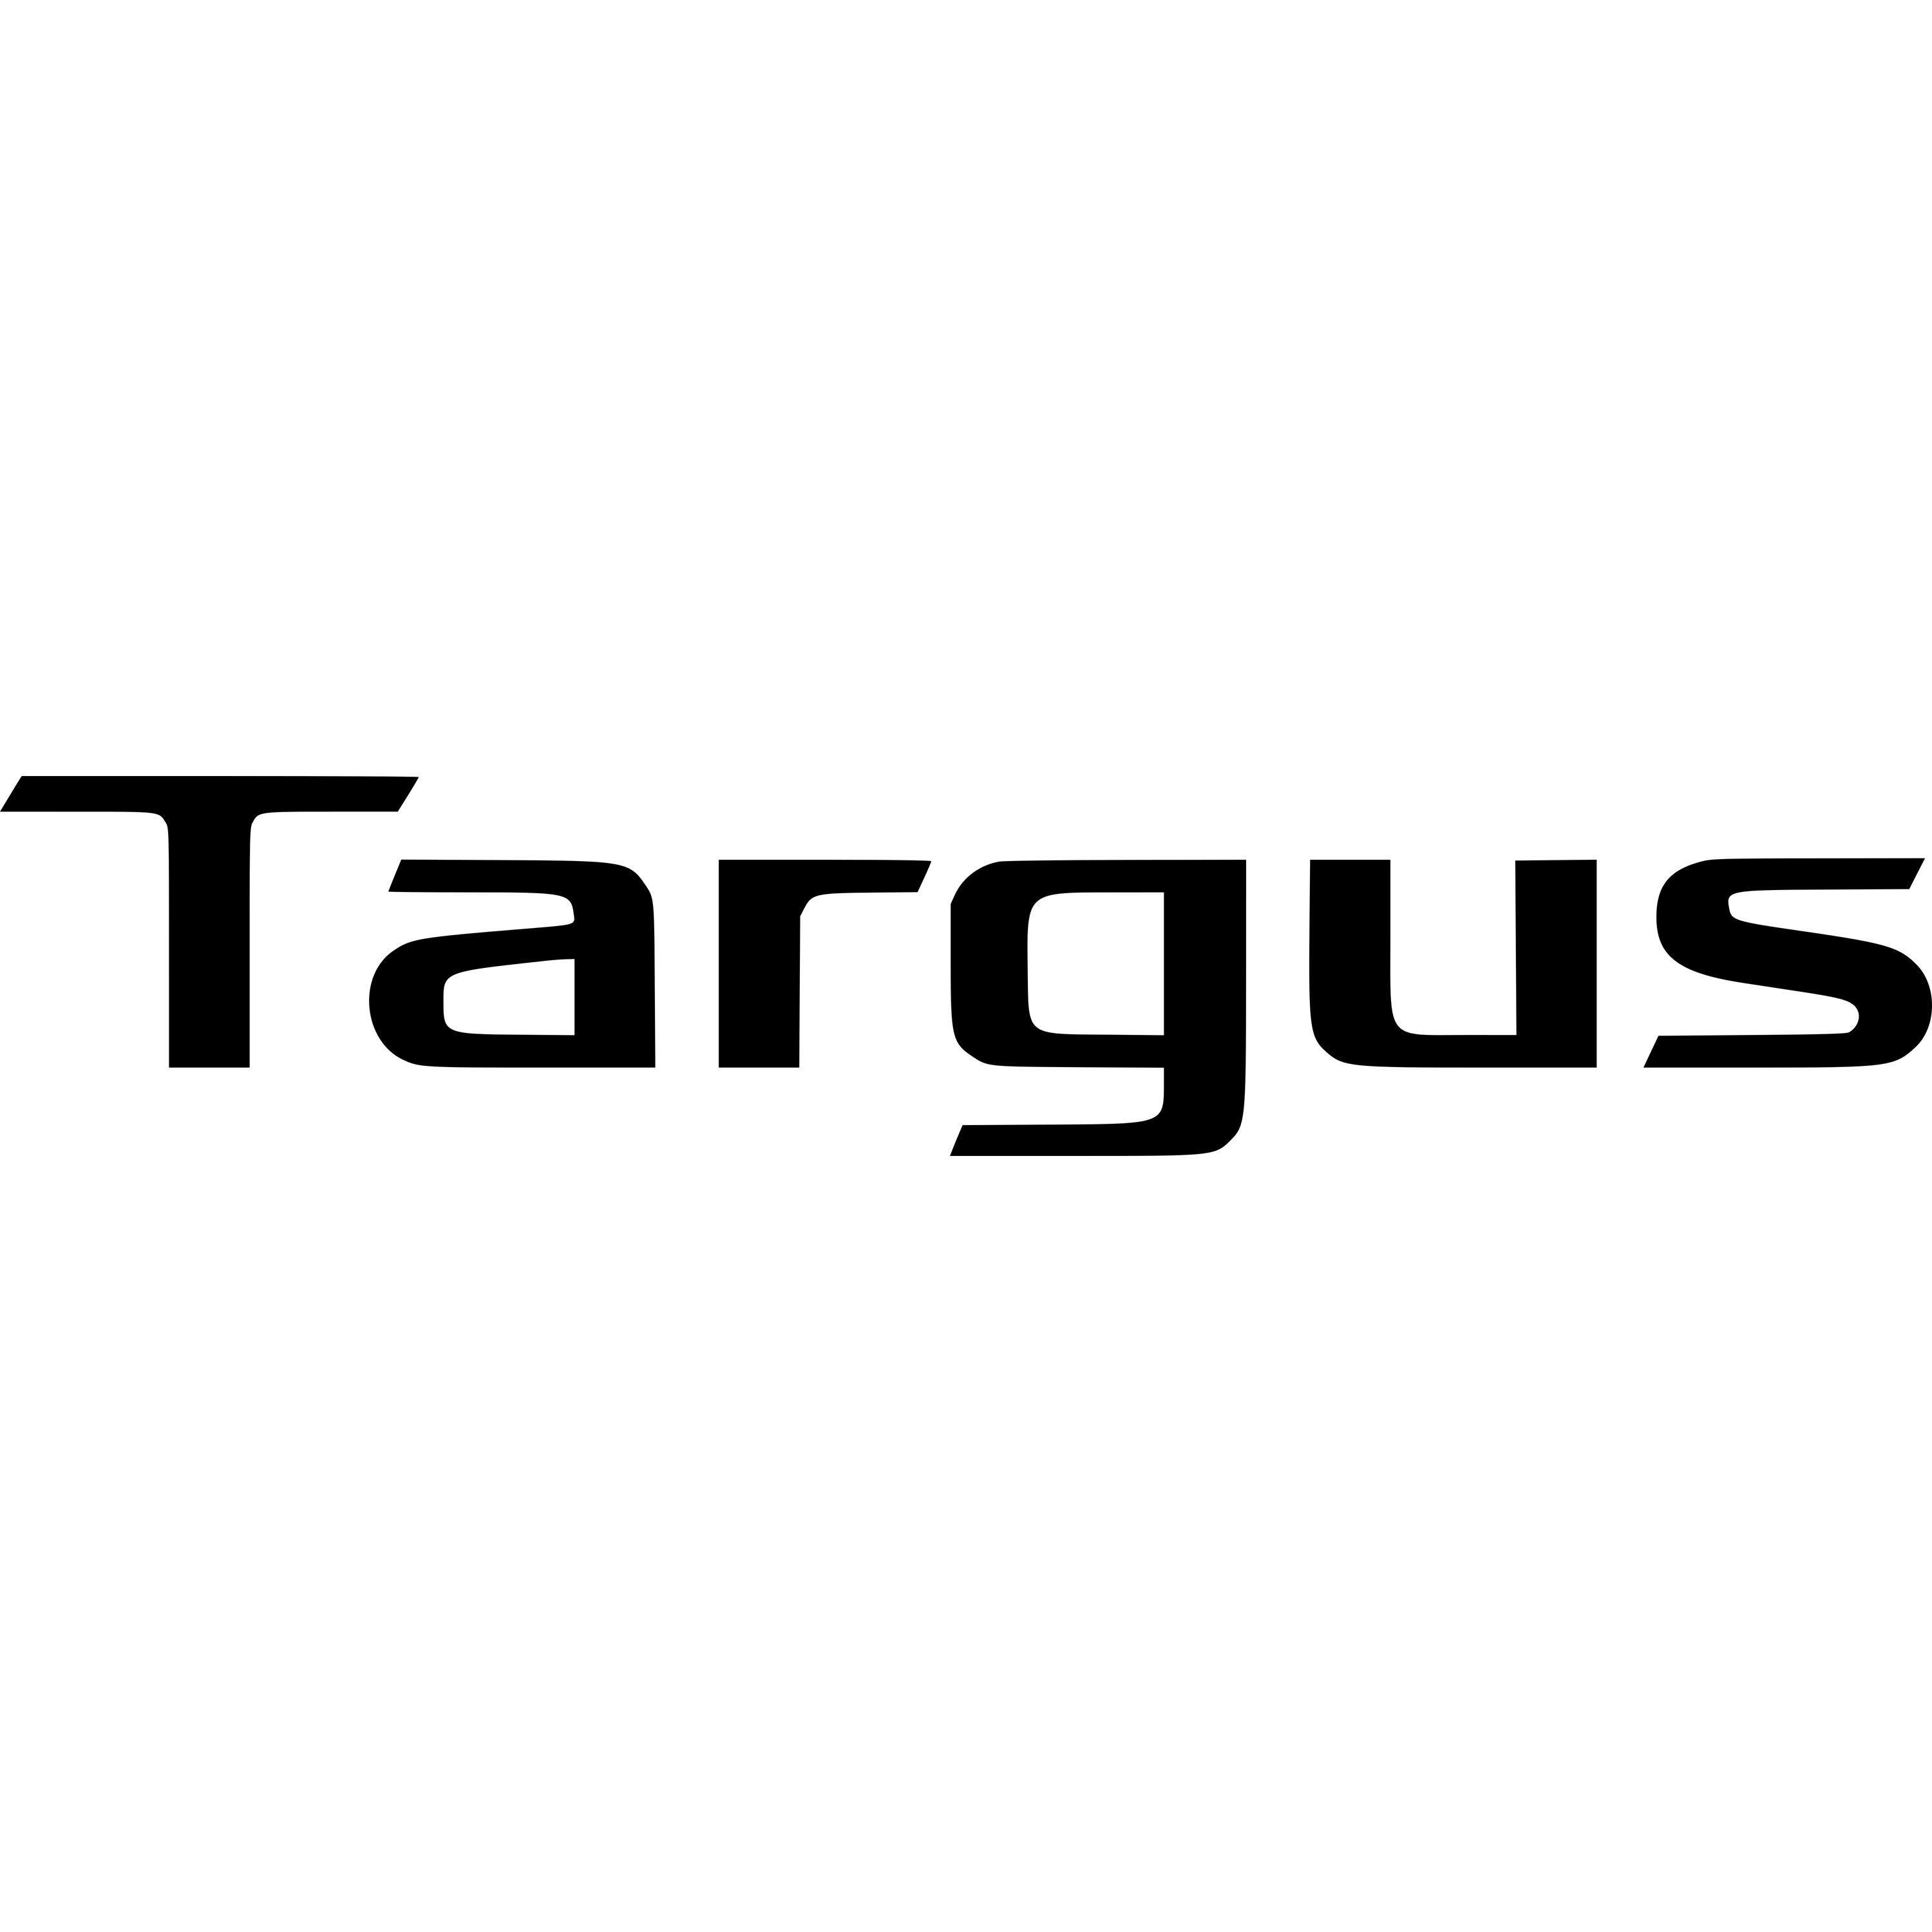 Targus Logo Transparent Image